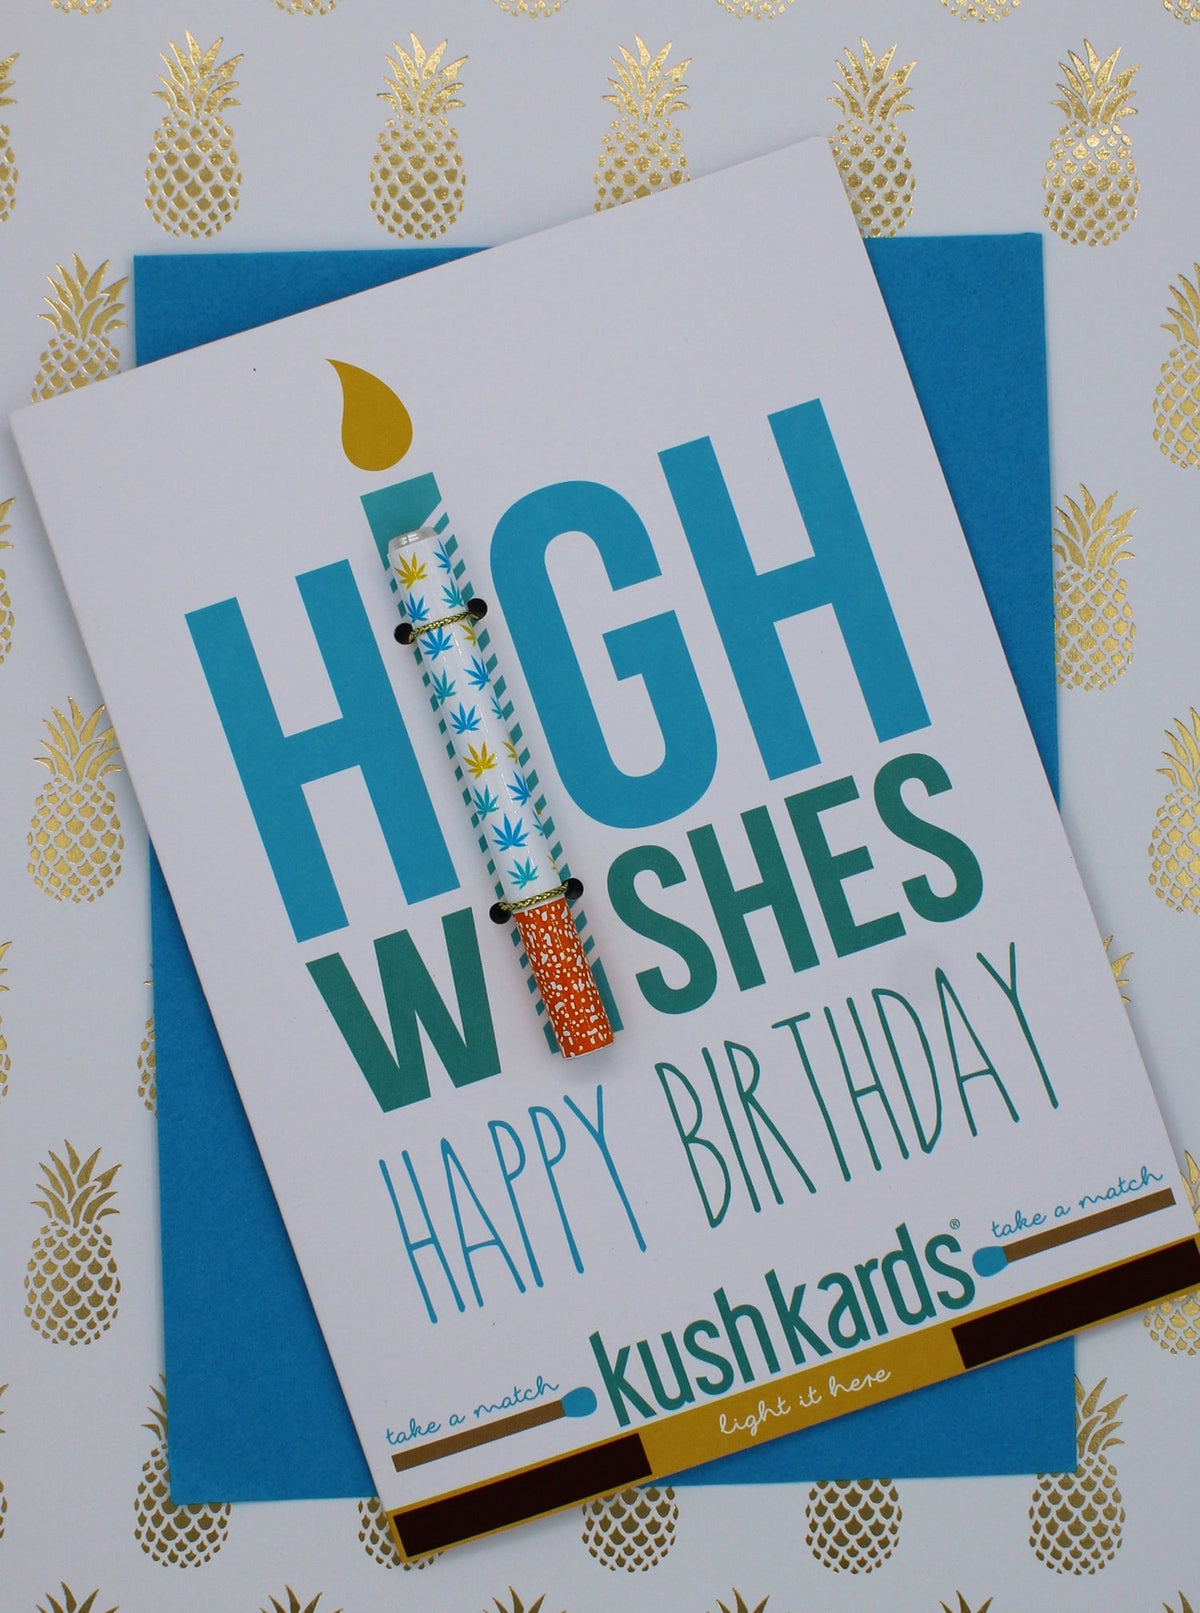 High Wishes You Happy Birthday One Hitter Kard KushKards